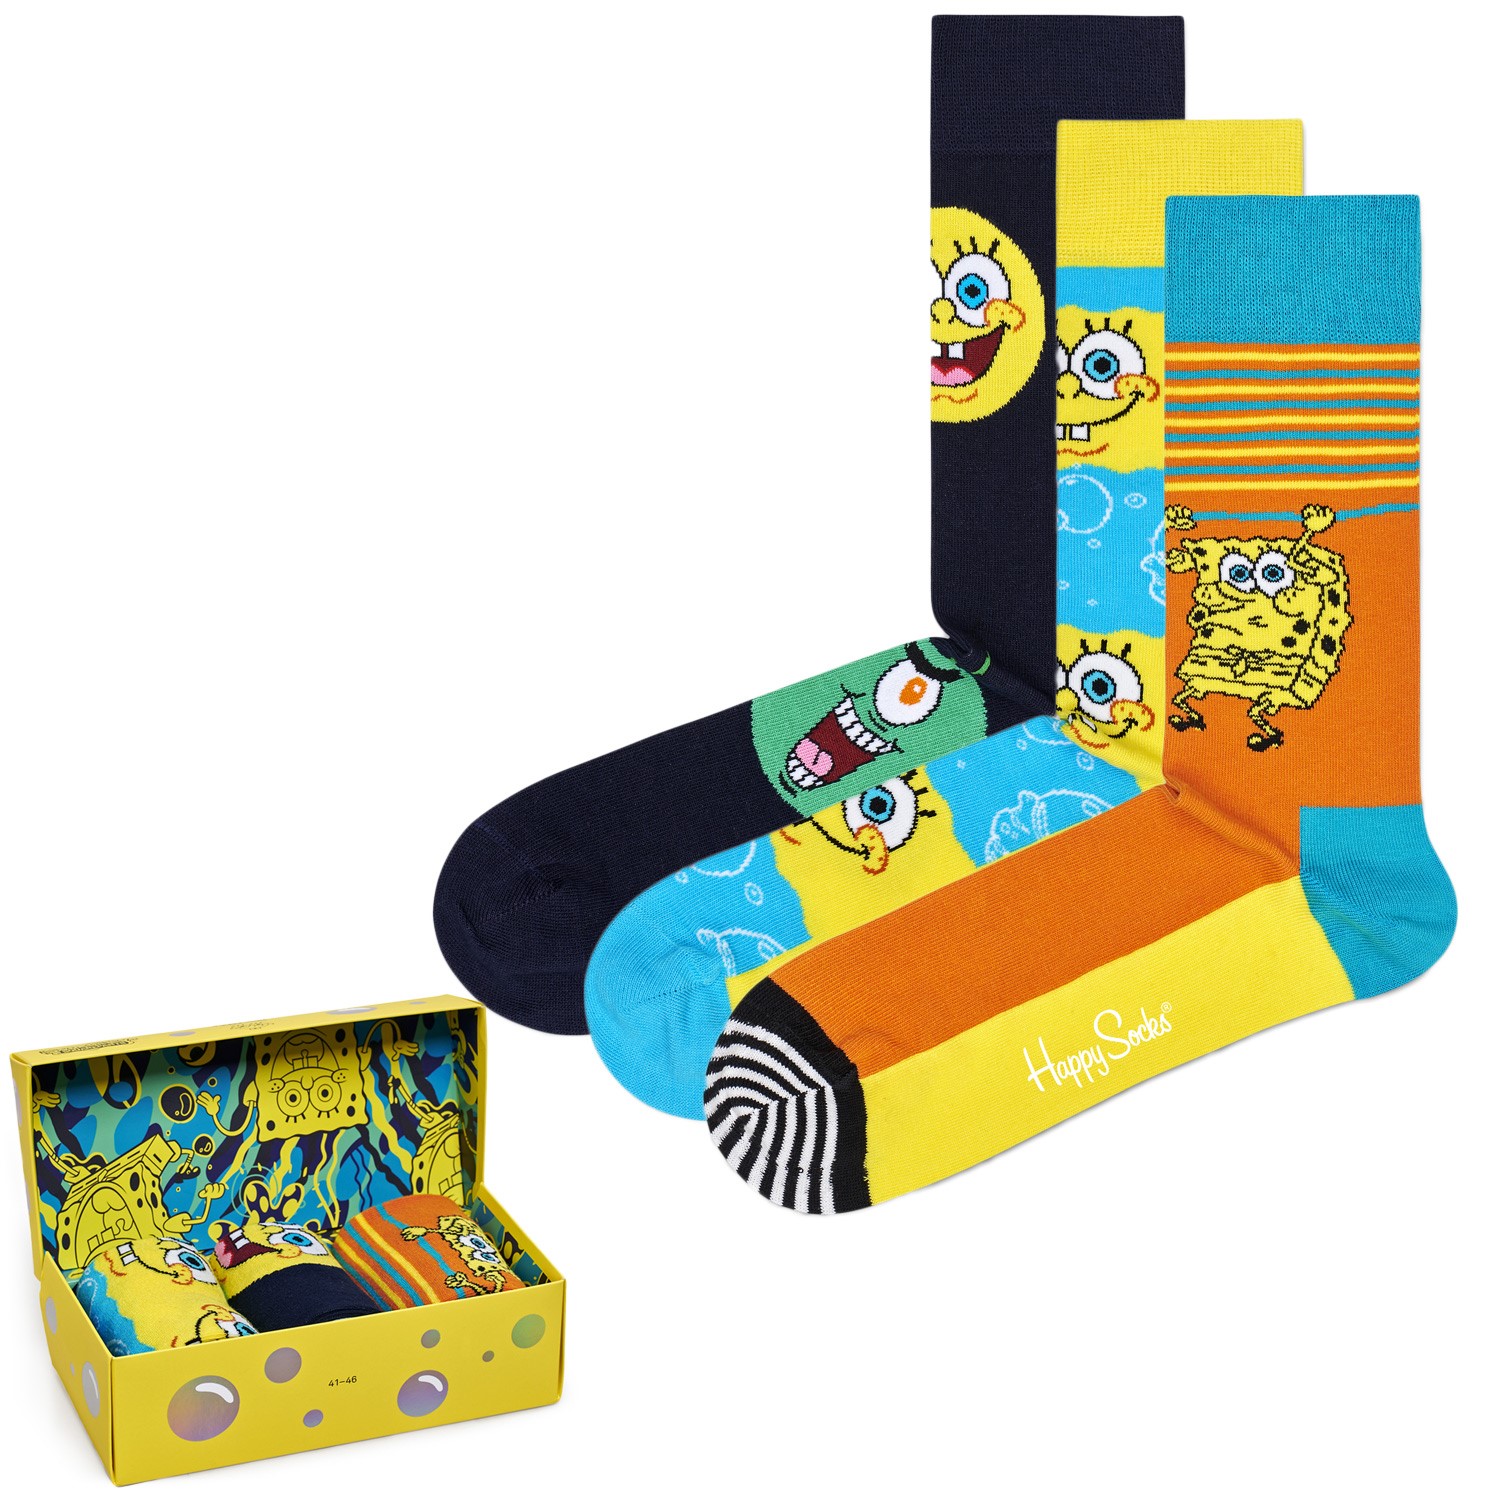 Happy Socks Sponge Bob Gift Box